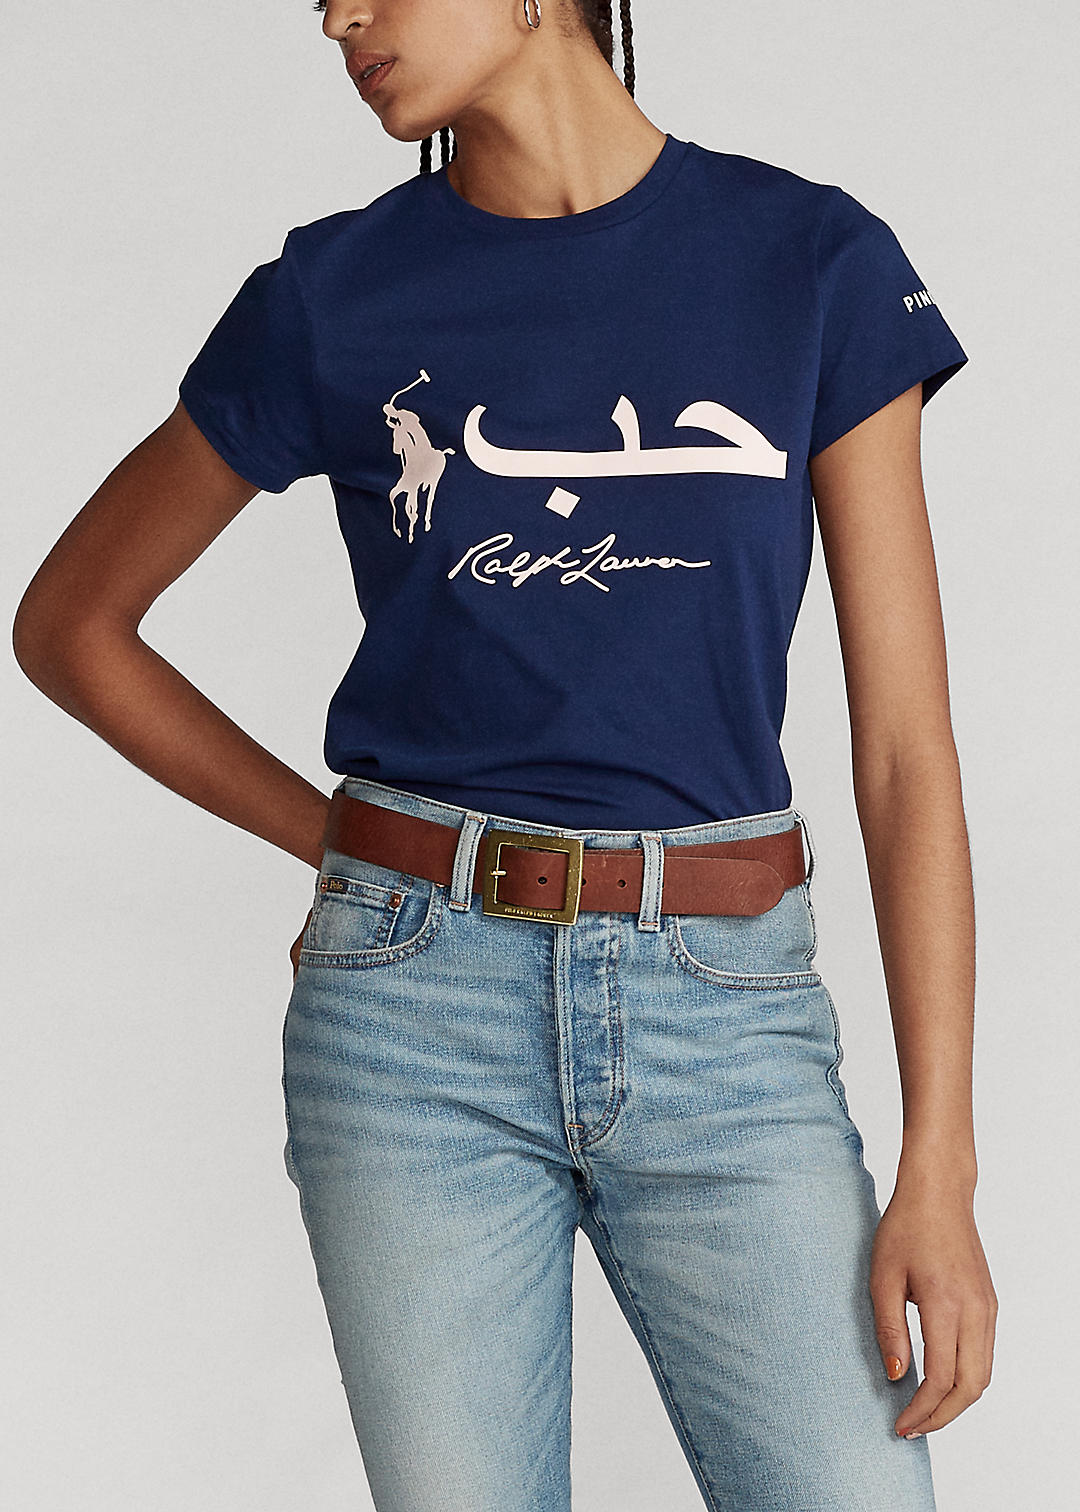 Pink Pony T-shirt Pink Pony Love en arabe 3